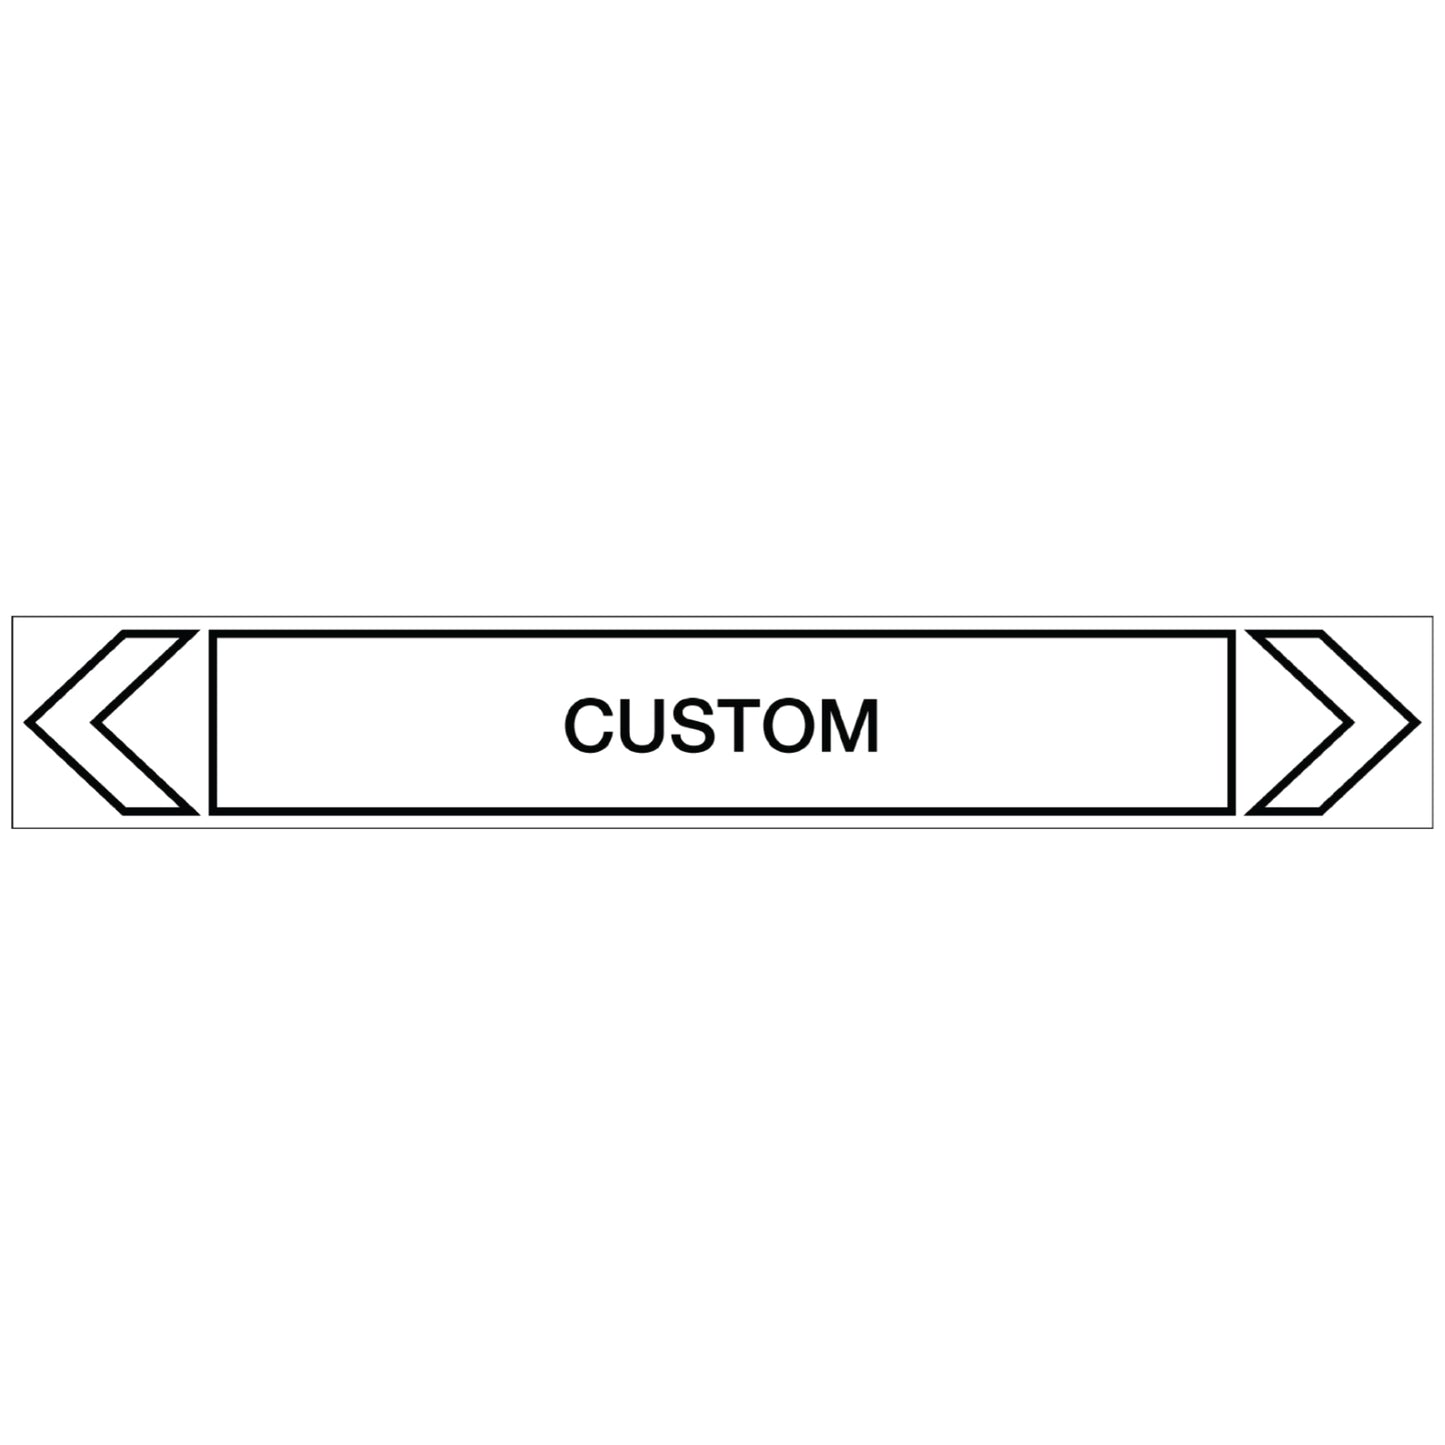 Communications - Custom - Pipe Marker Sticker